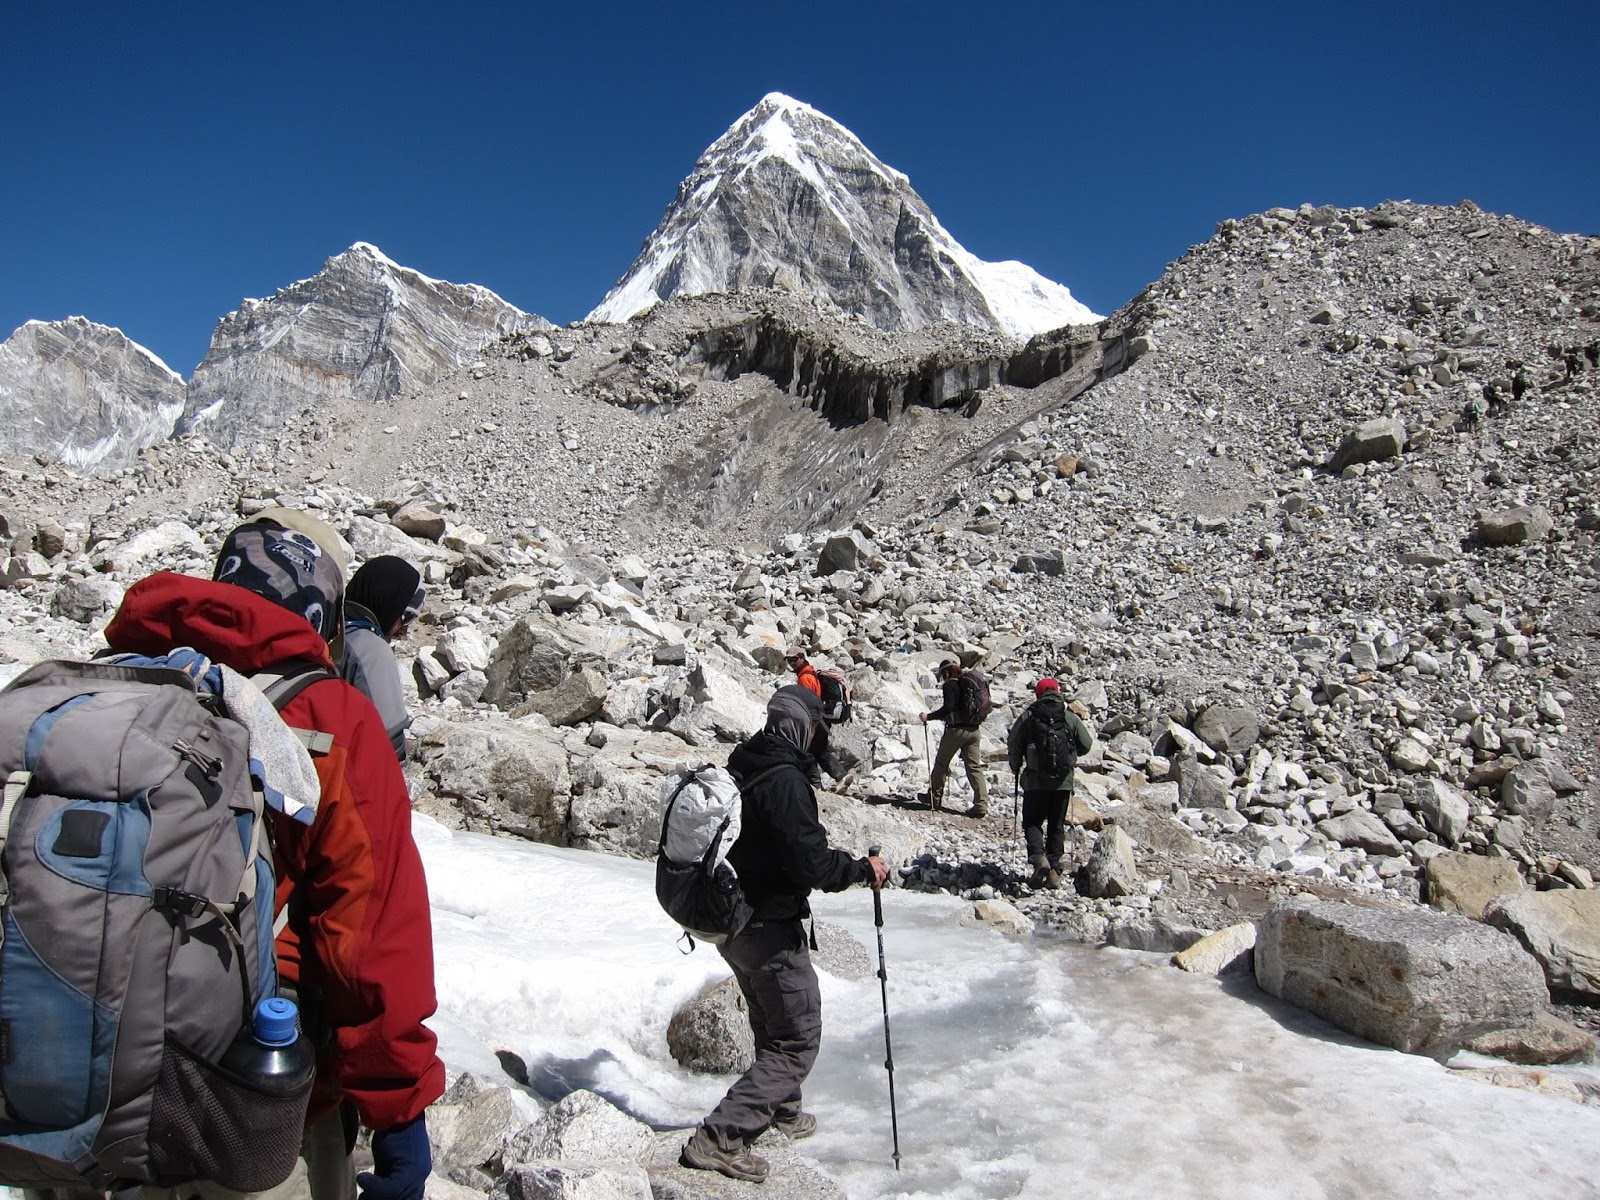 Trekking the World!: Nepal: Part 4 - Mt. Everest Base Camp (17,598 ft